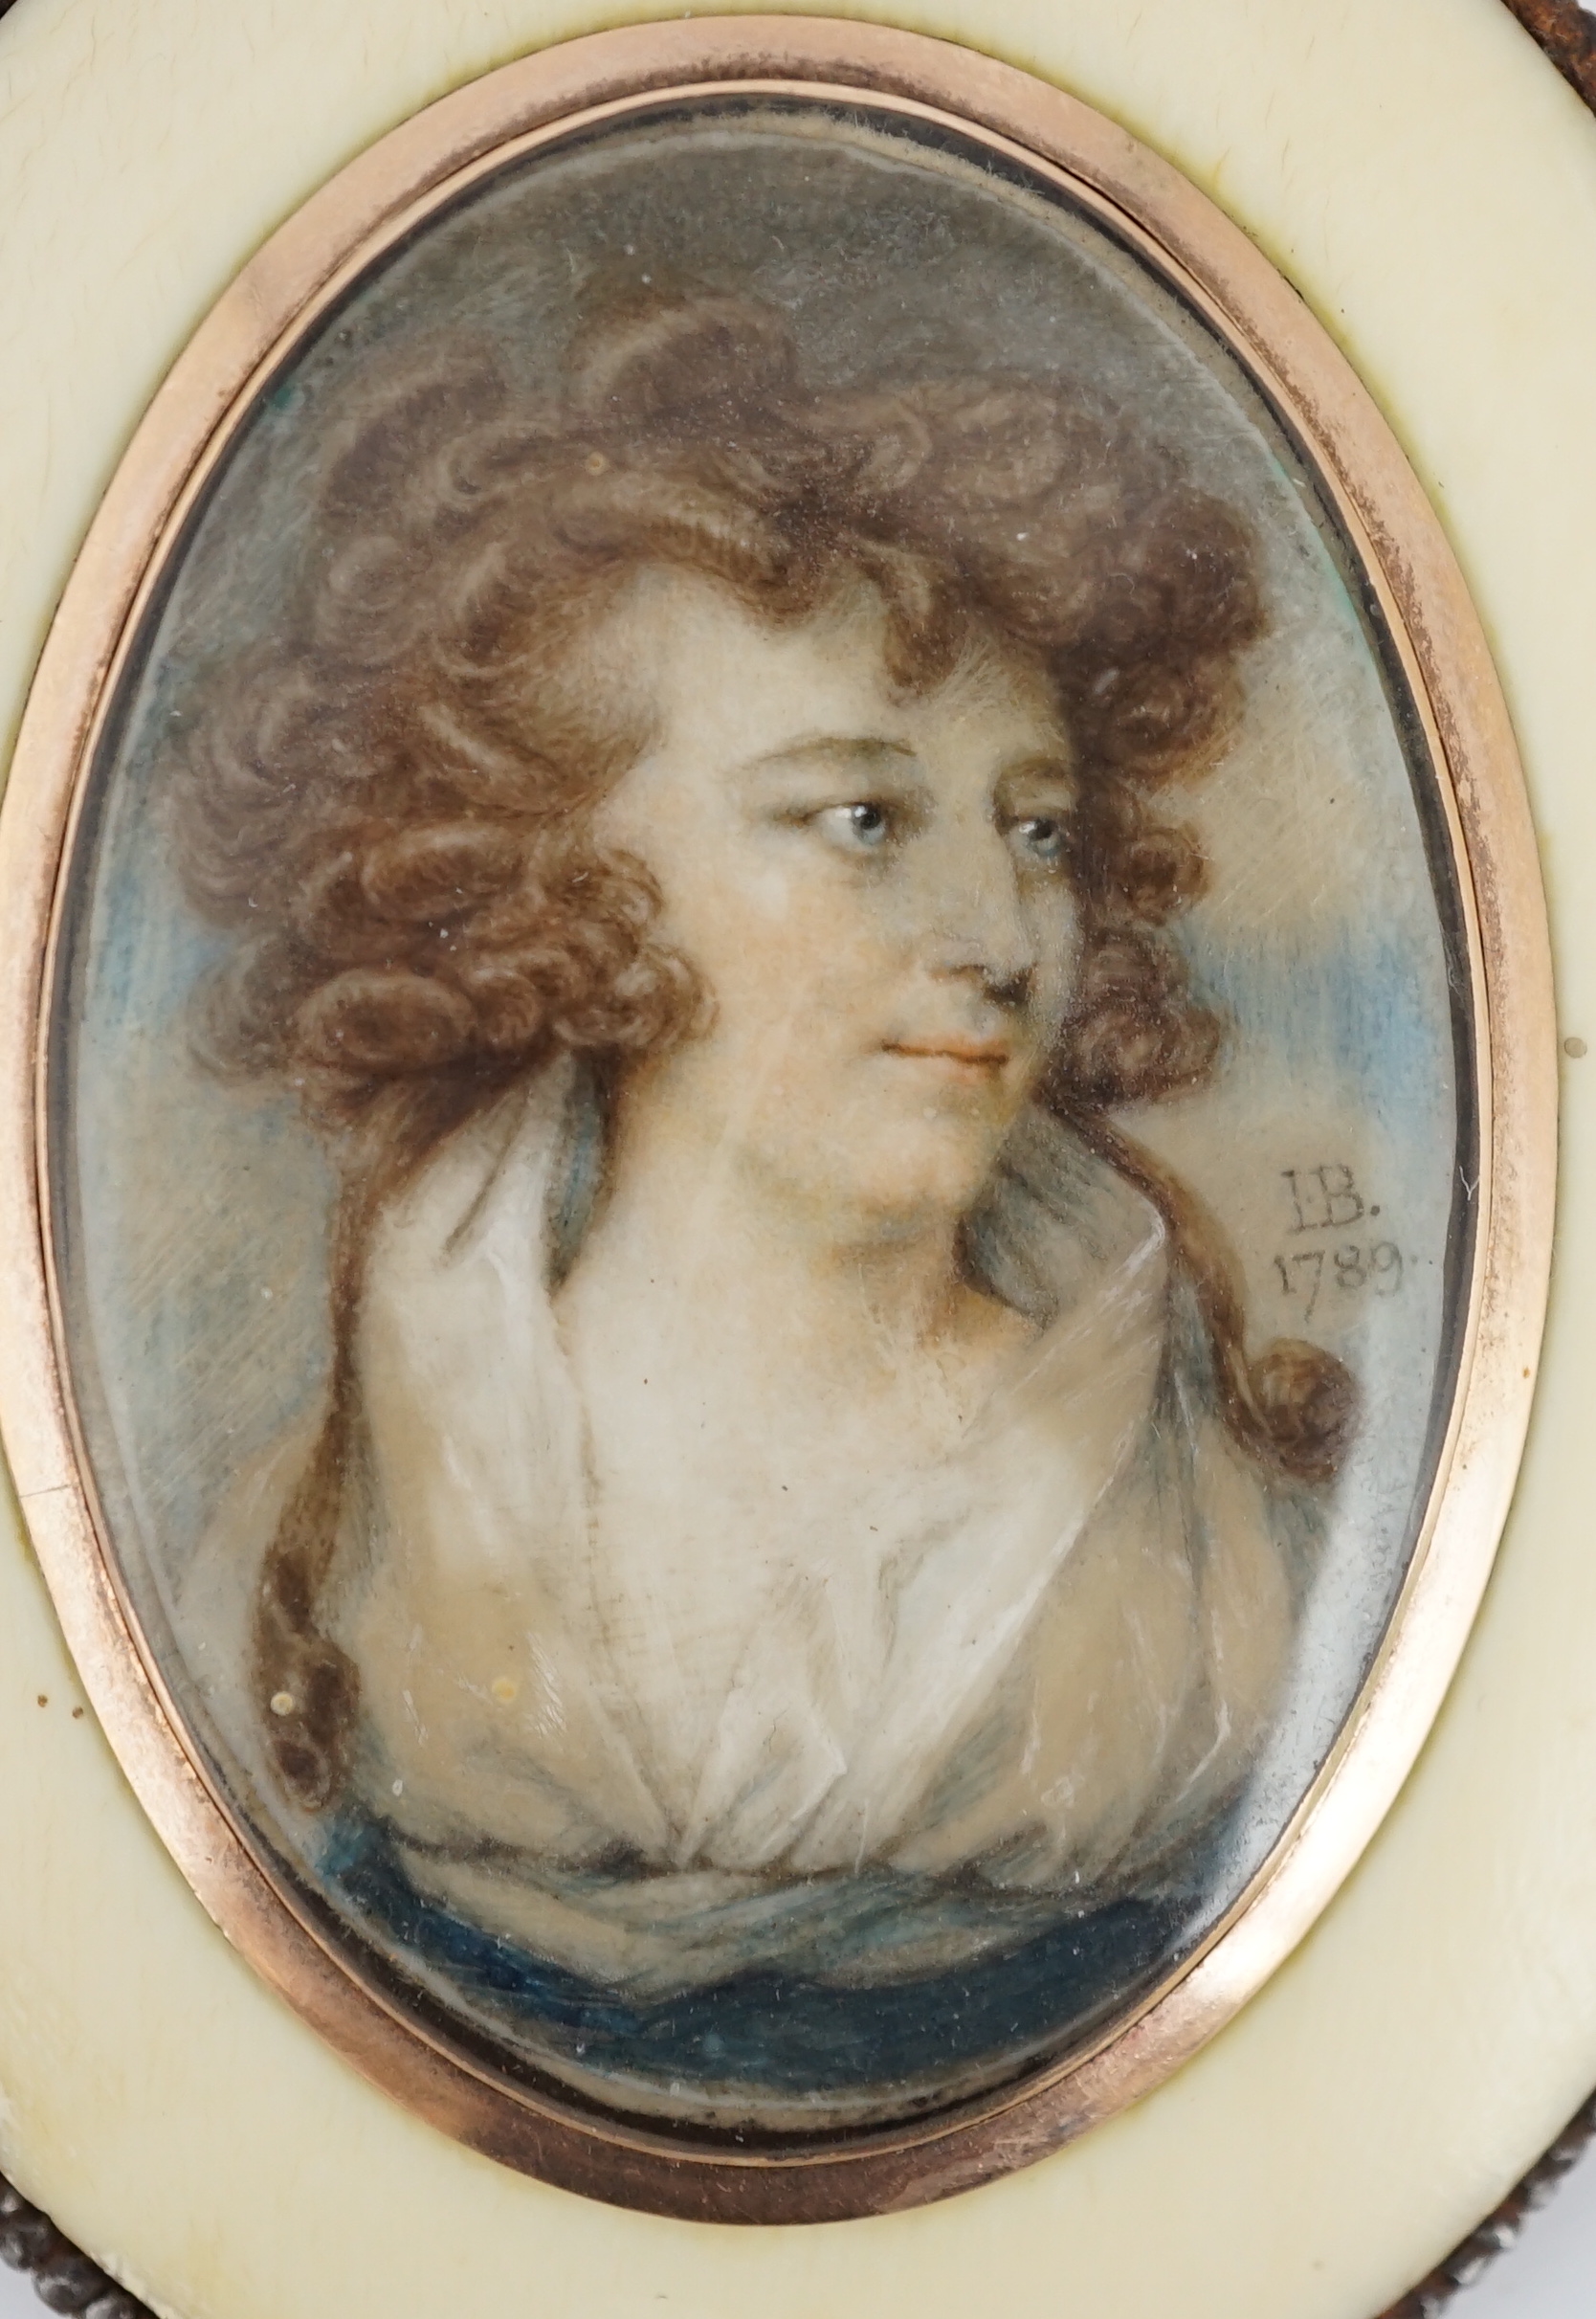 John Bogle (British, 1746-1803), Portrait miniature of a lady, oil on ivory, 4.3 x 3cm. CITES Submission reference S8HJ56MK